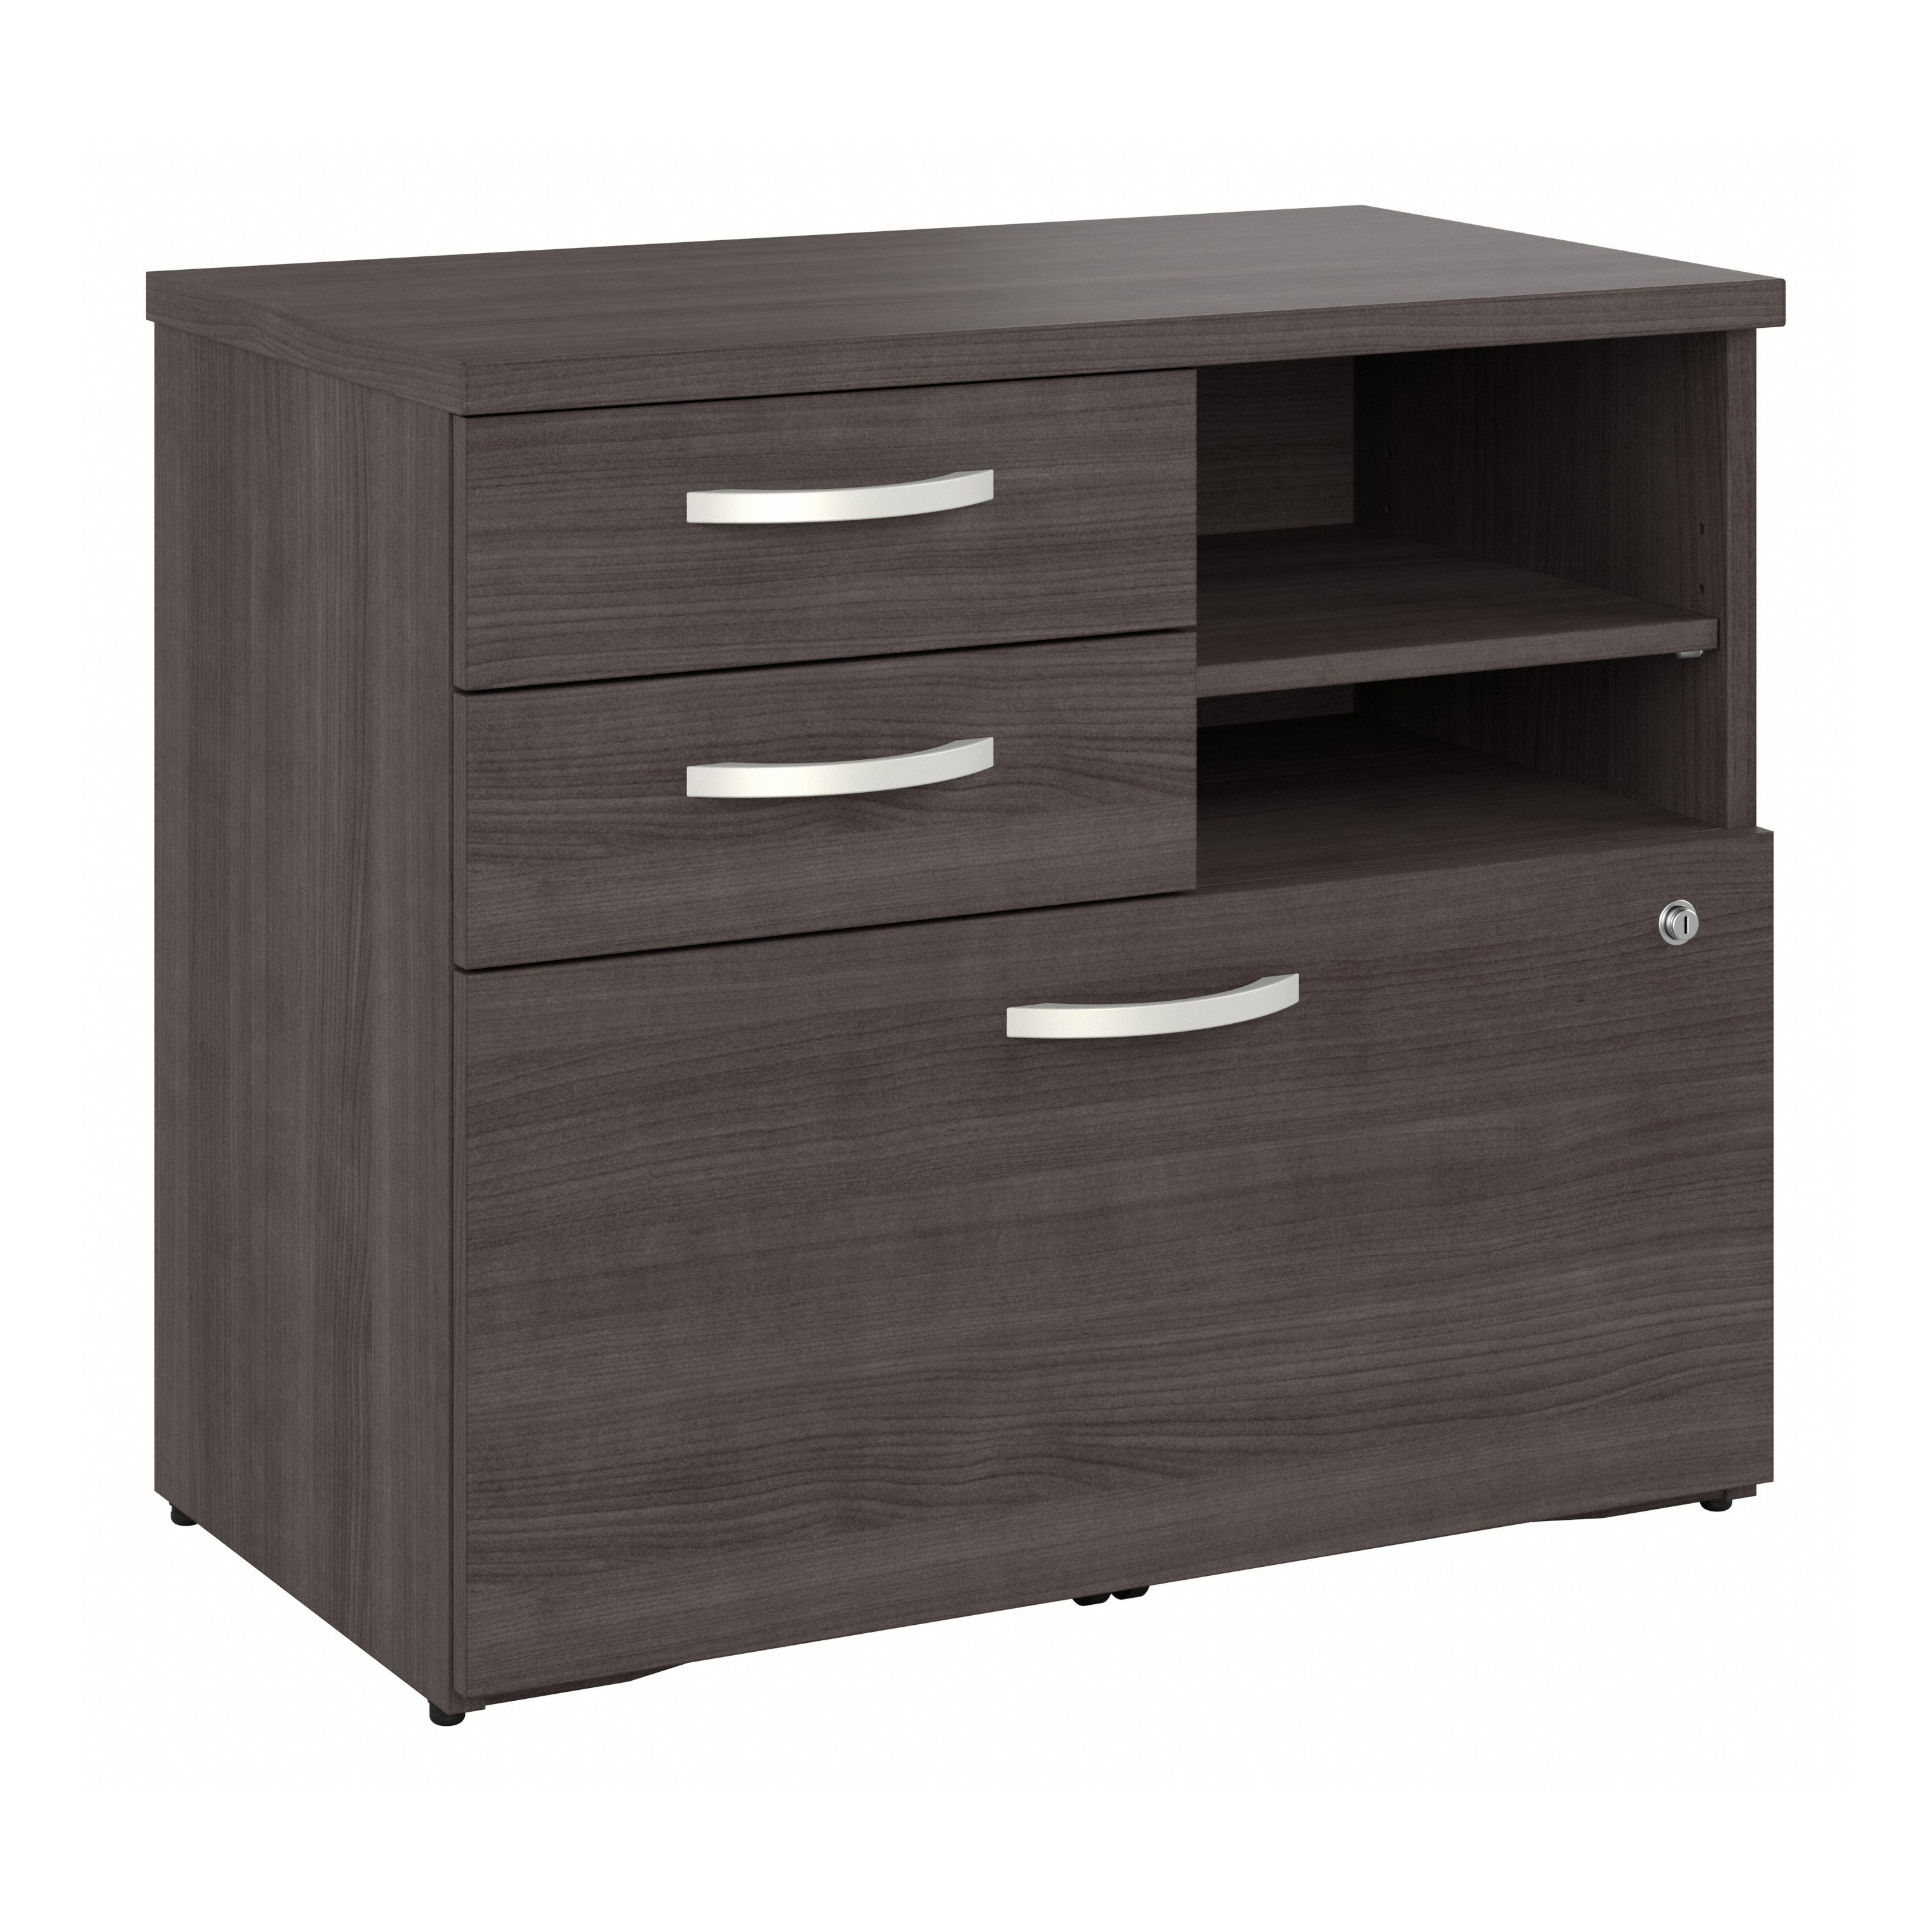 Shop Bush Business Furniture Studio C Office Storage Cabinet with Drawers and Shelves 02 SCF130SGSU #color_storm gray